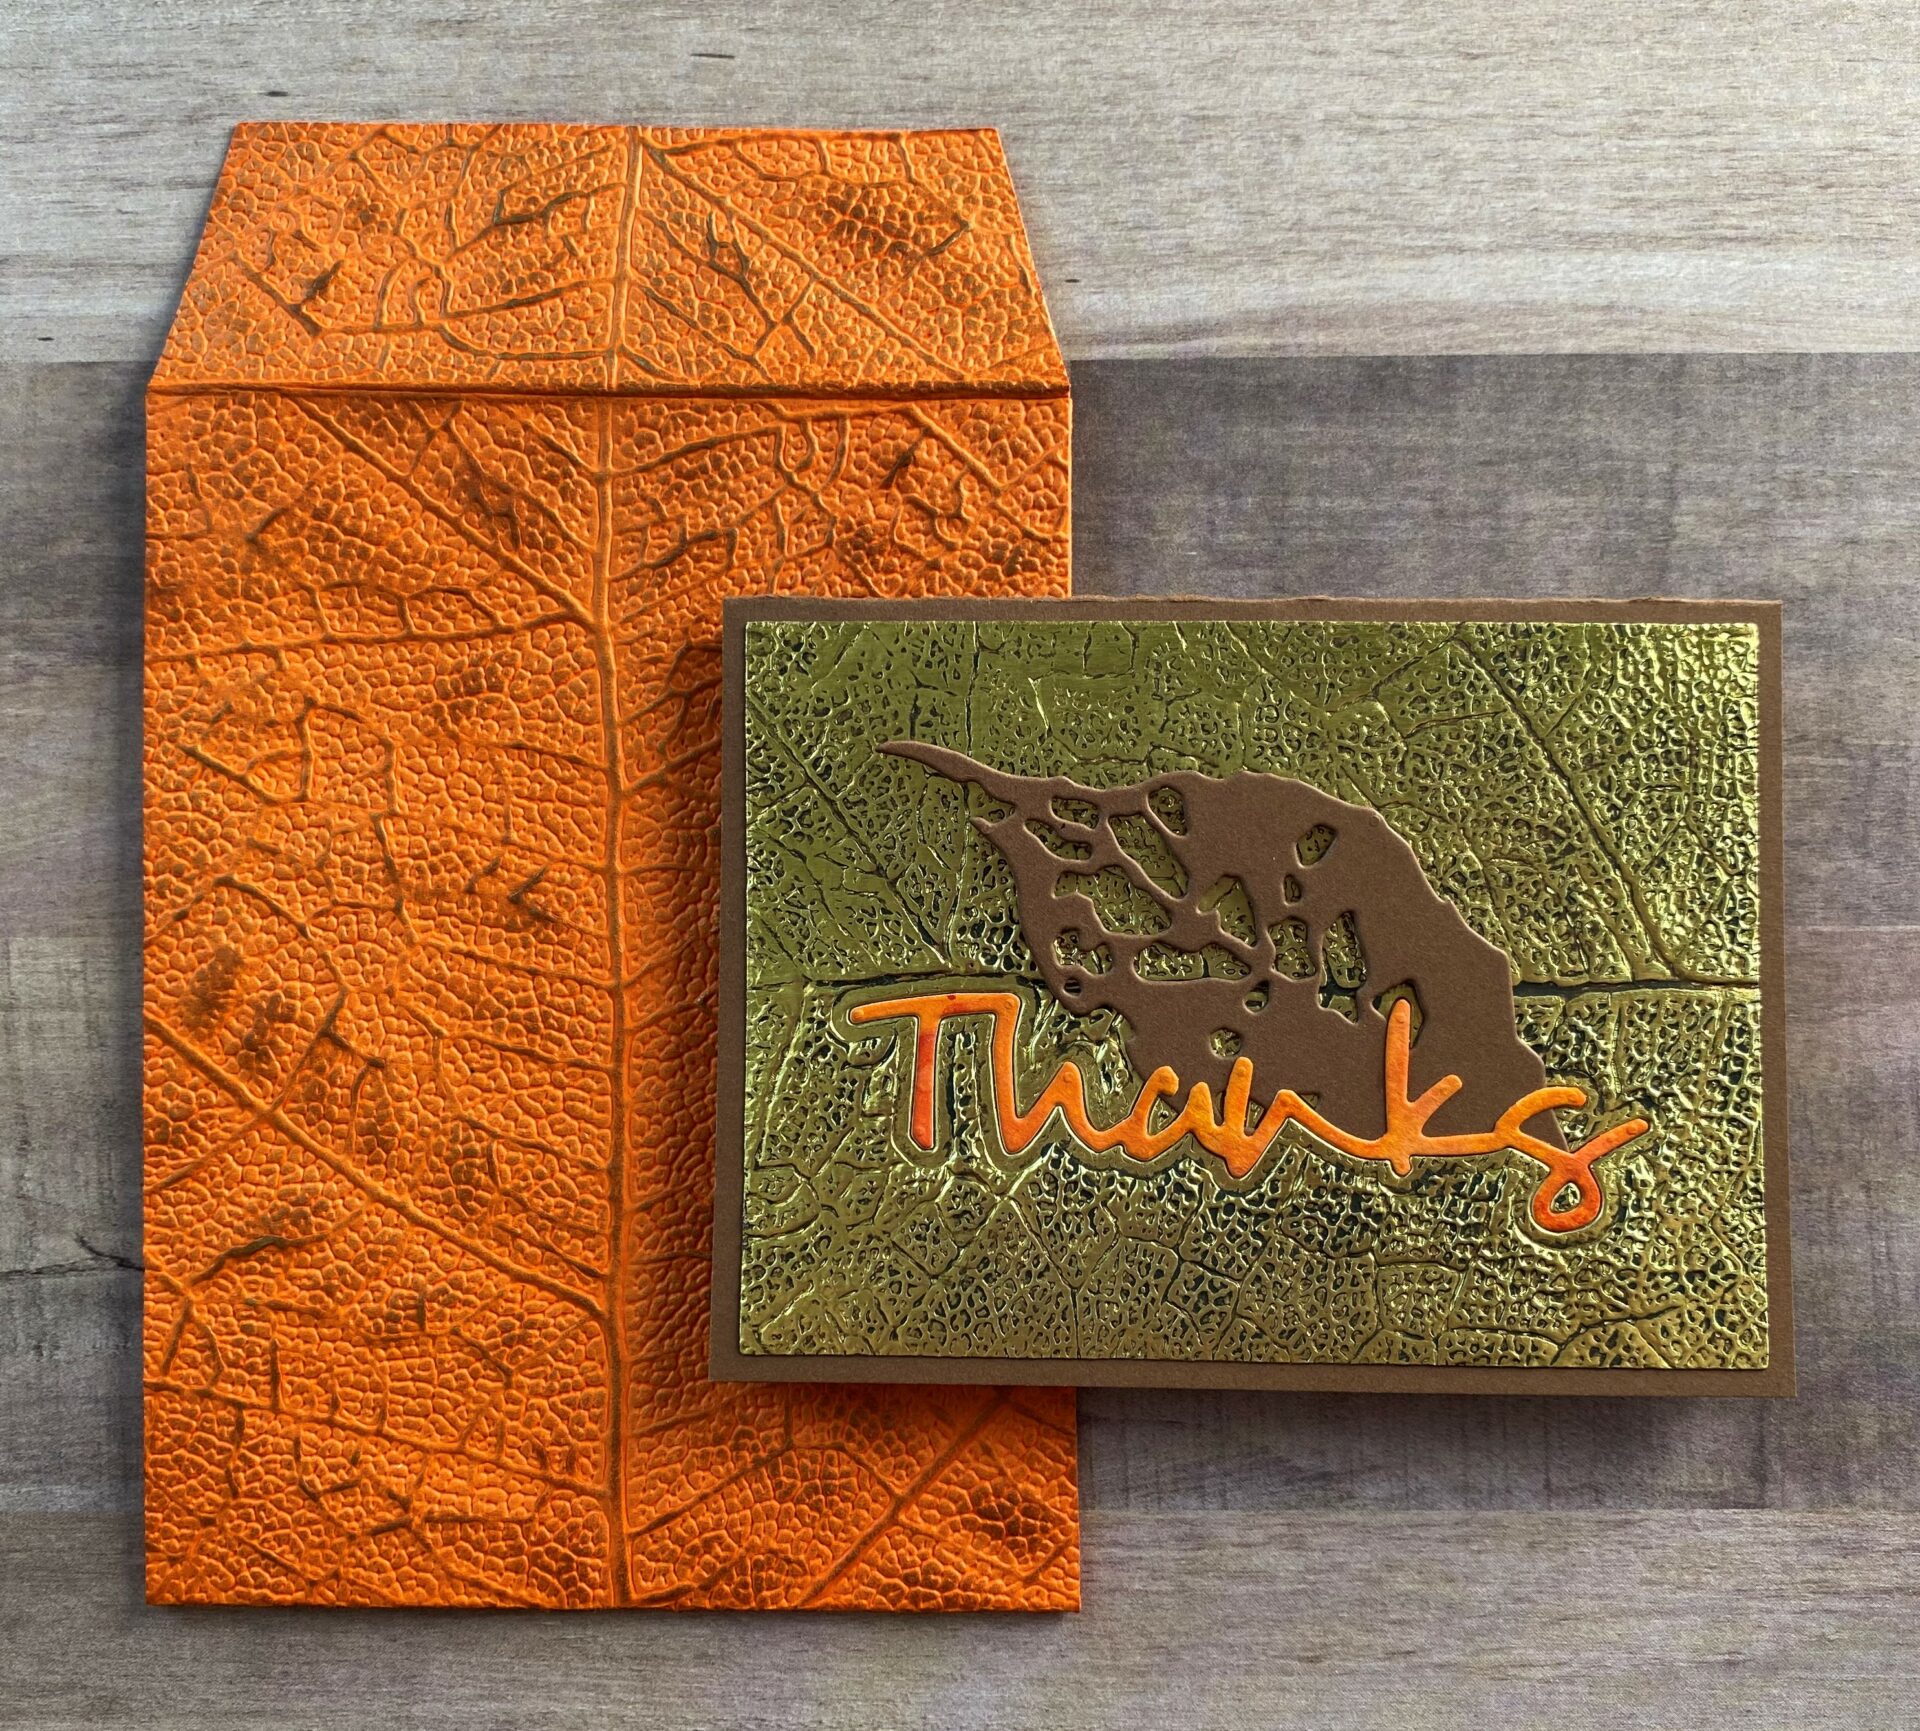 Leaf thanks card B with embossed envelope